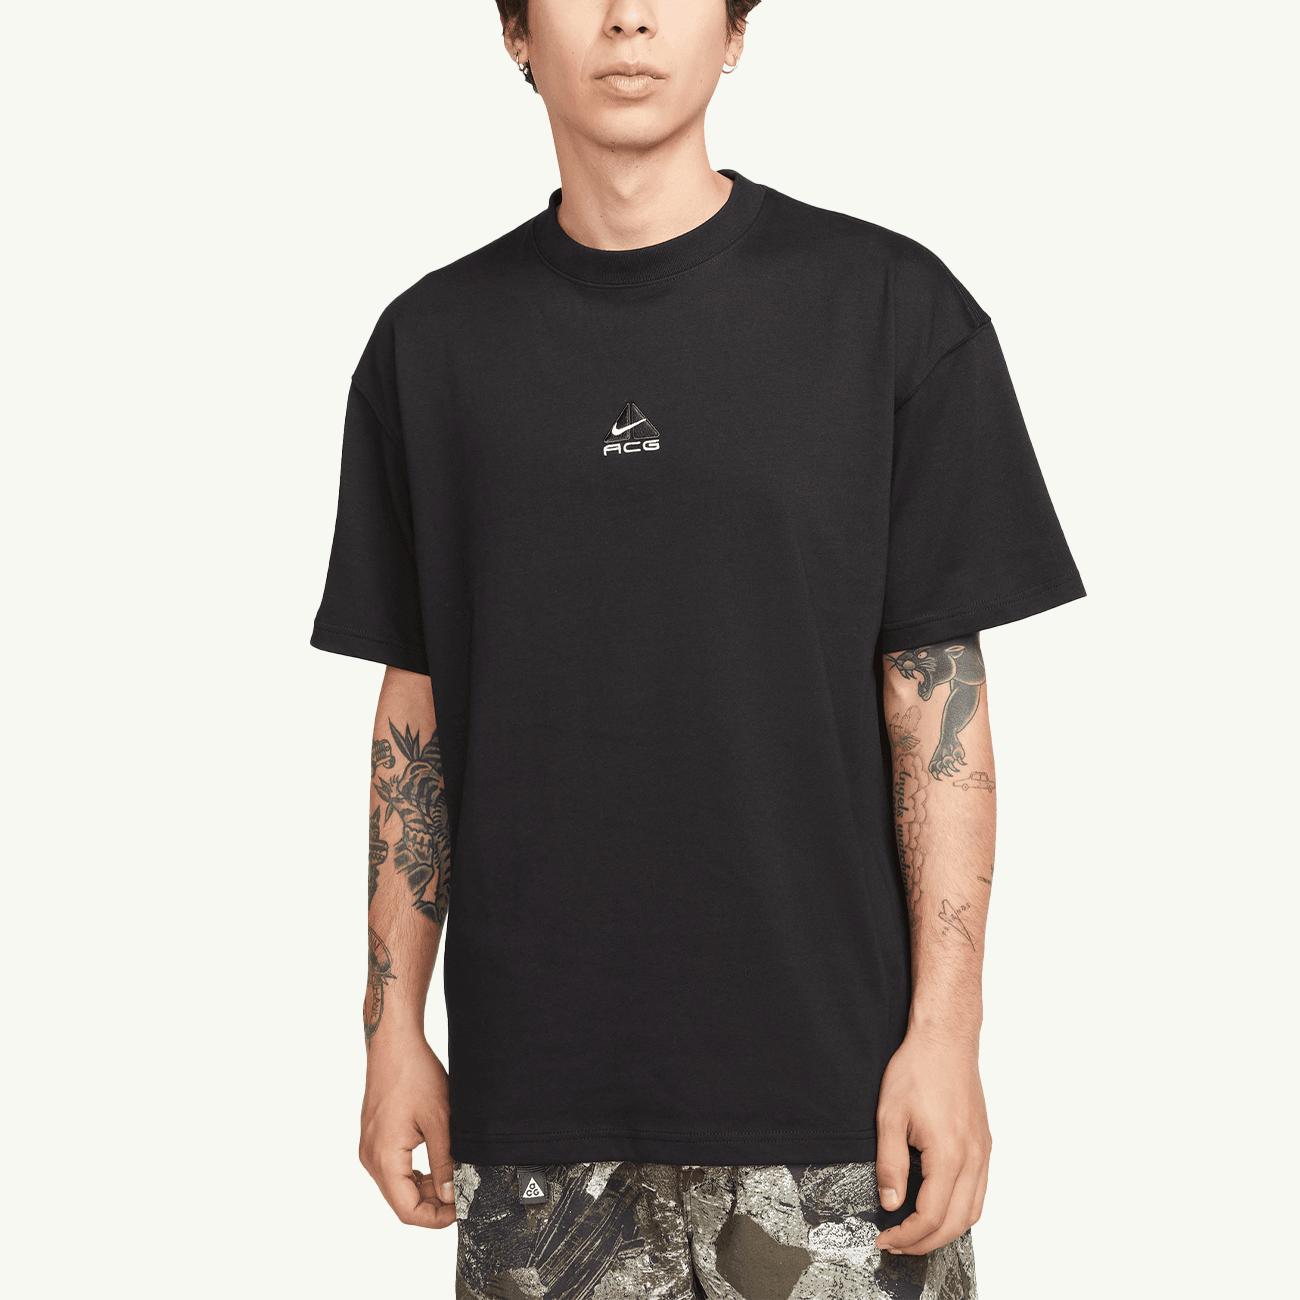 ACG 'Lungs' T-Shirt - Black/LT Smoke Grey/Summit White